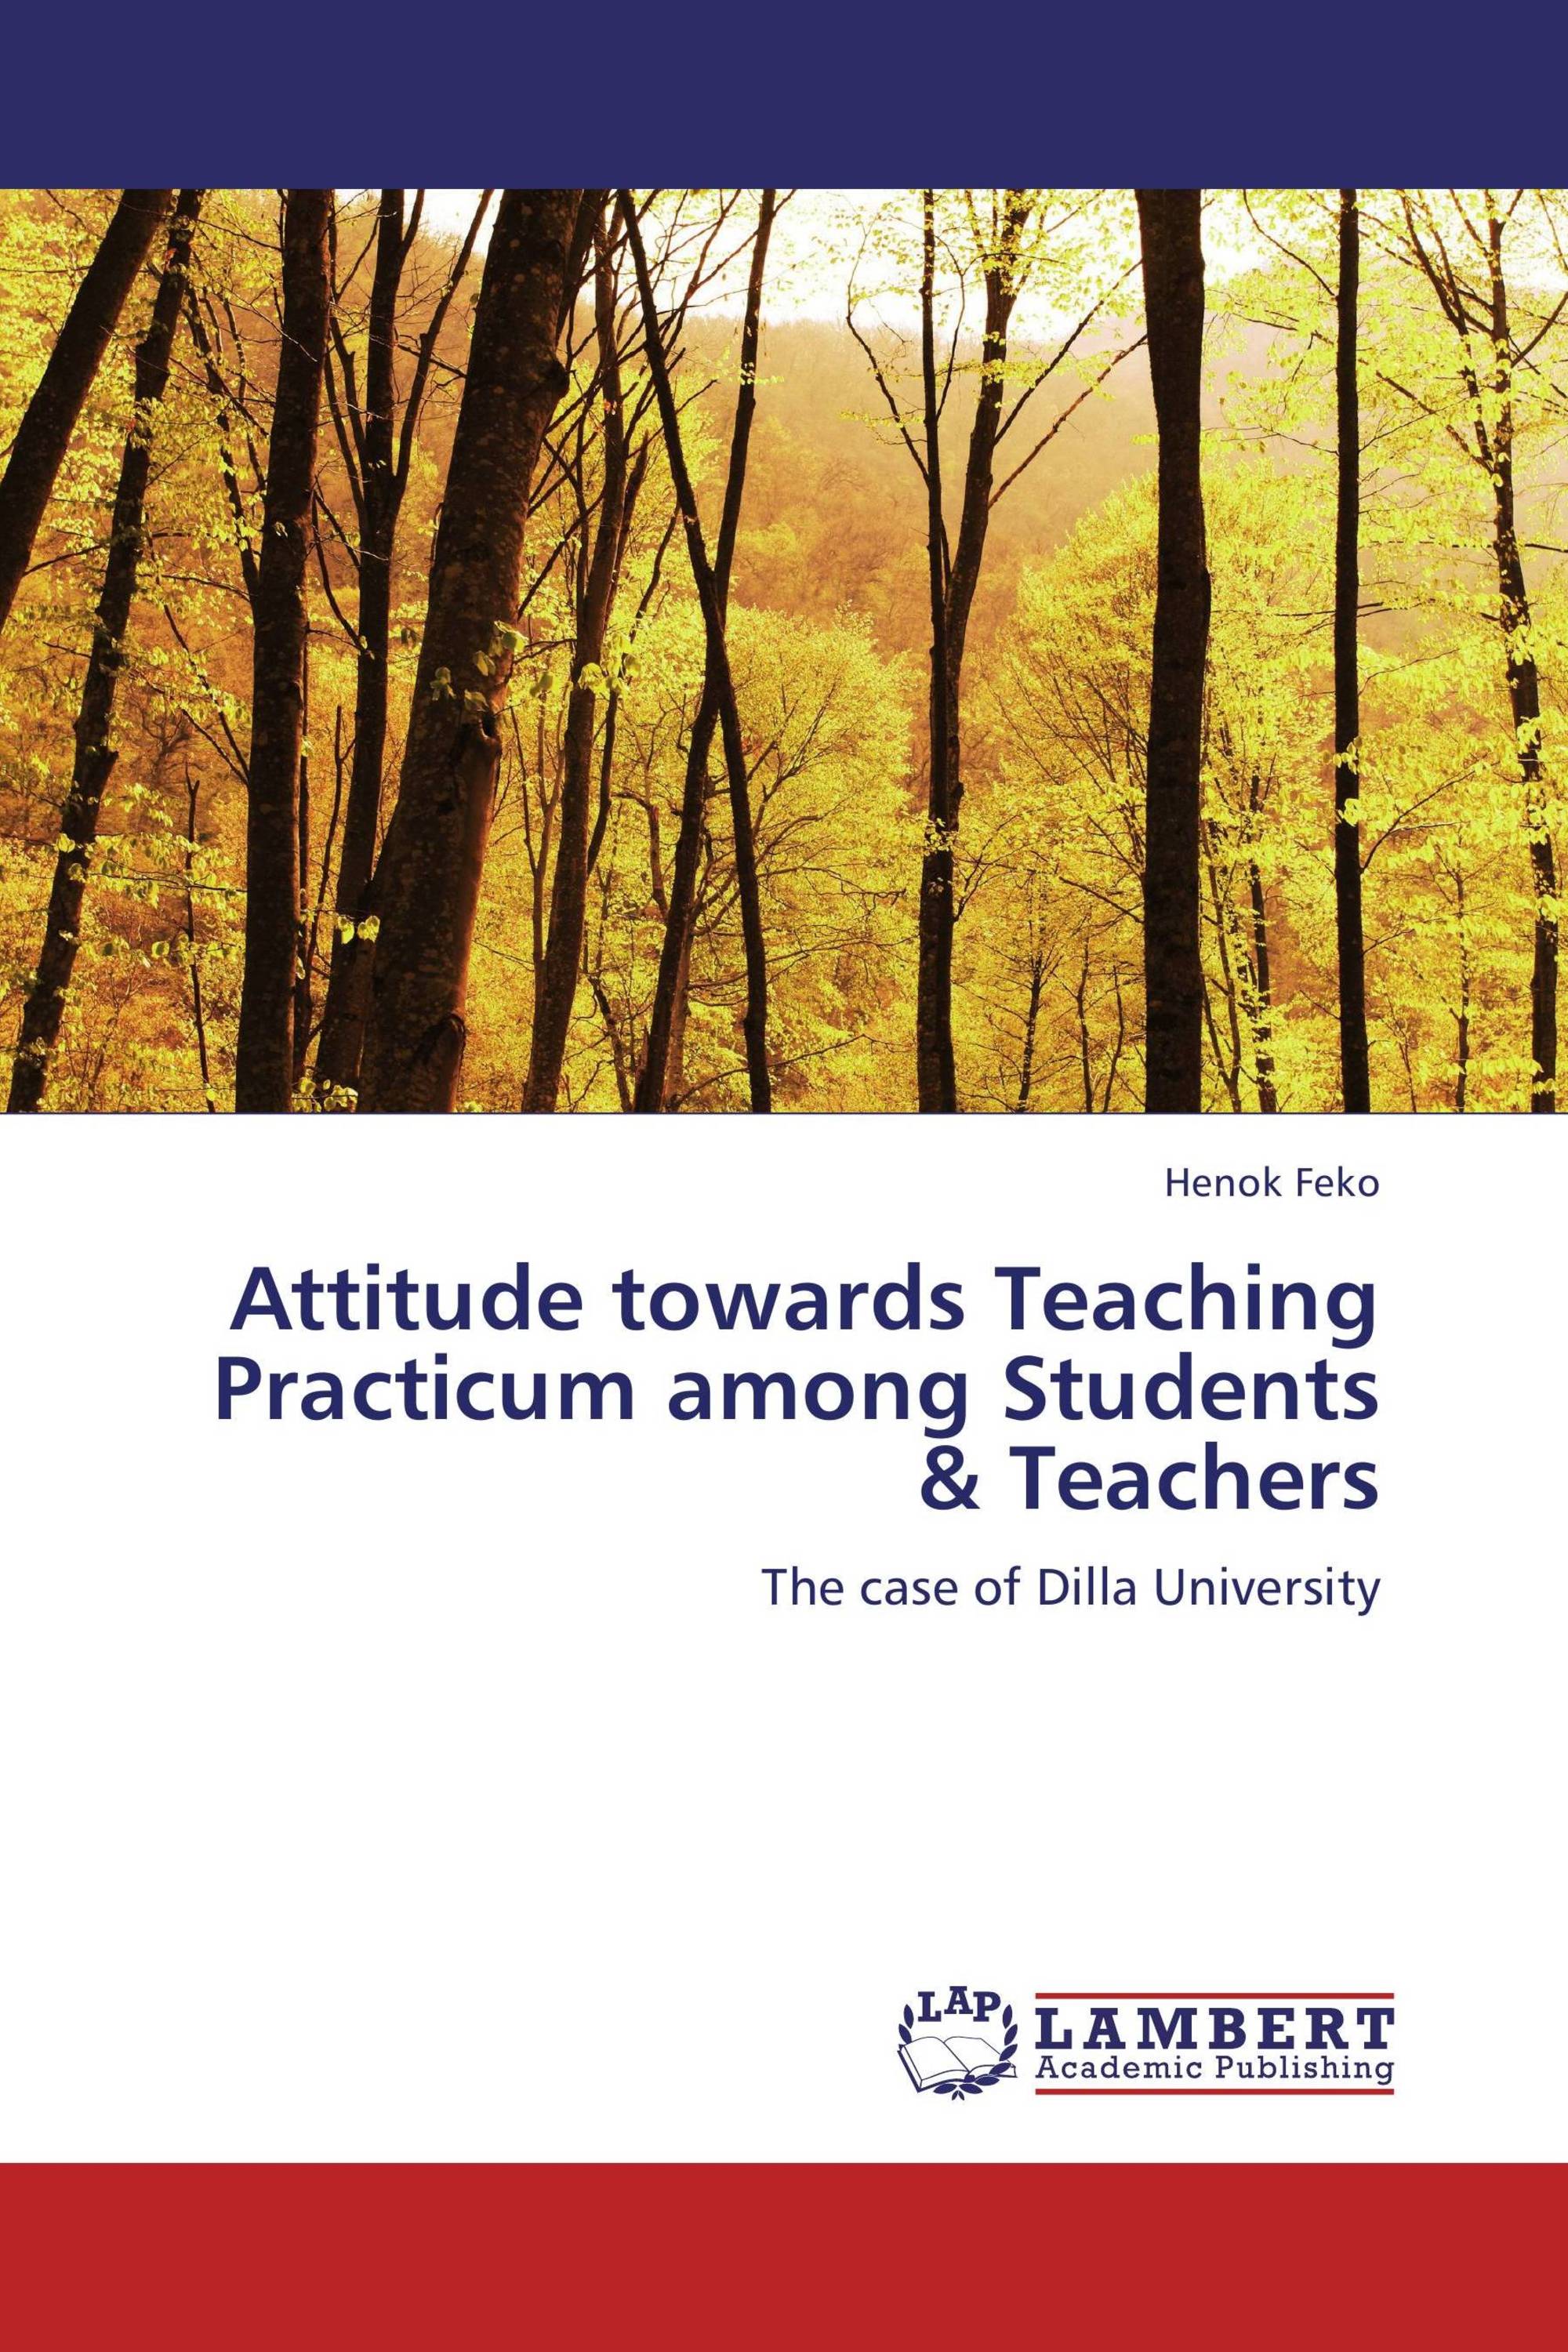 literature review on teachers' attitude